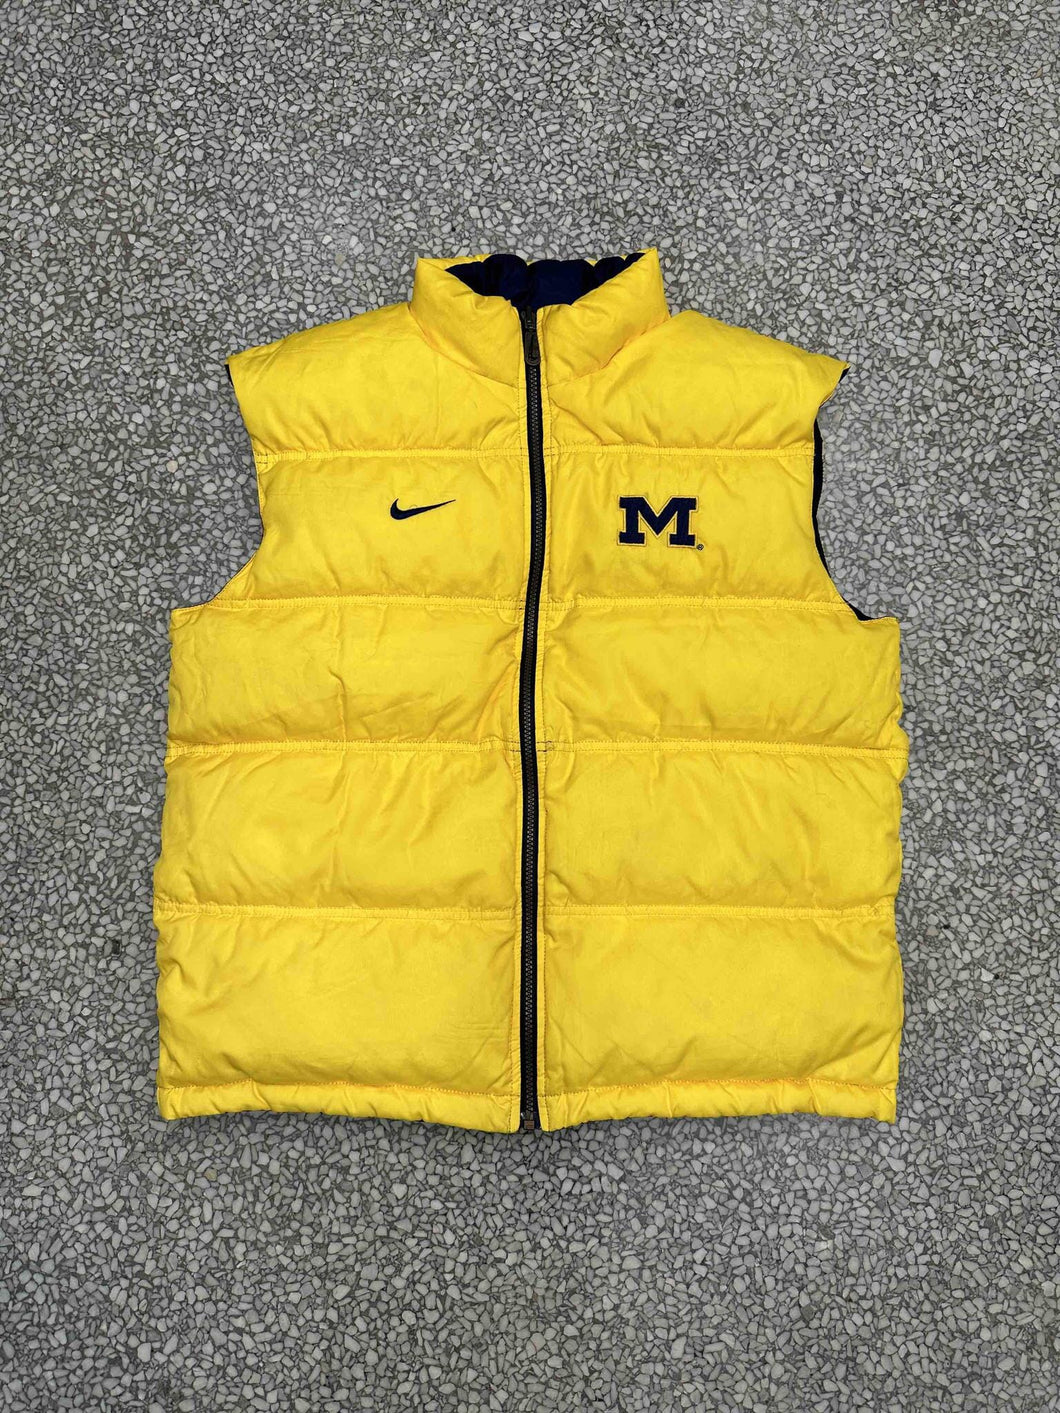 Michigan Wolverines Vintage 90s Nike Reversible Puffer Vest ABC Vintage 